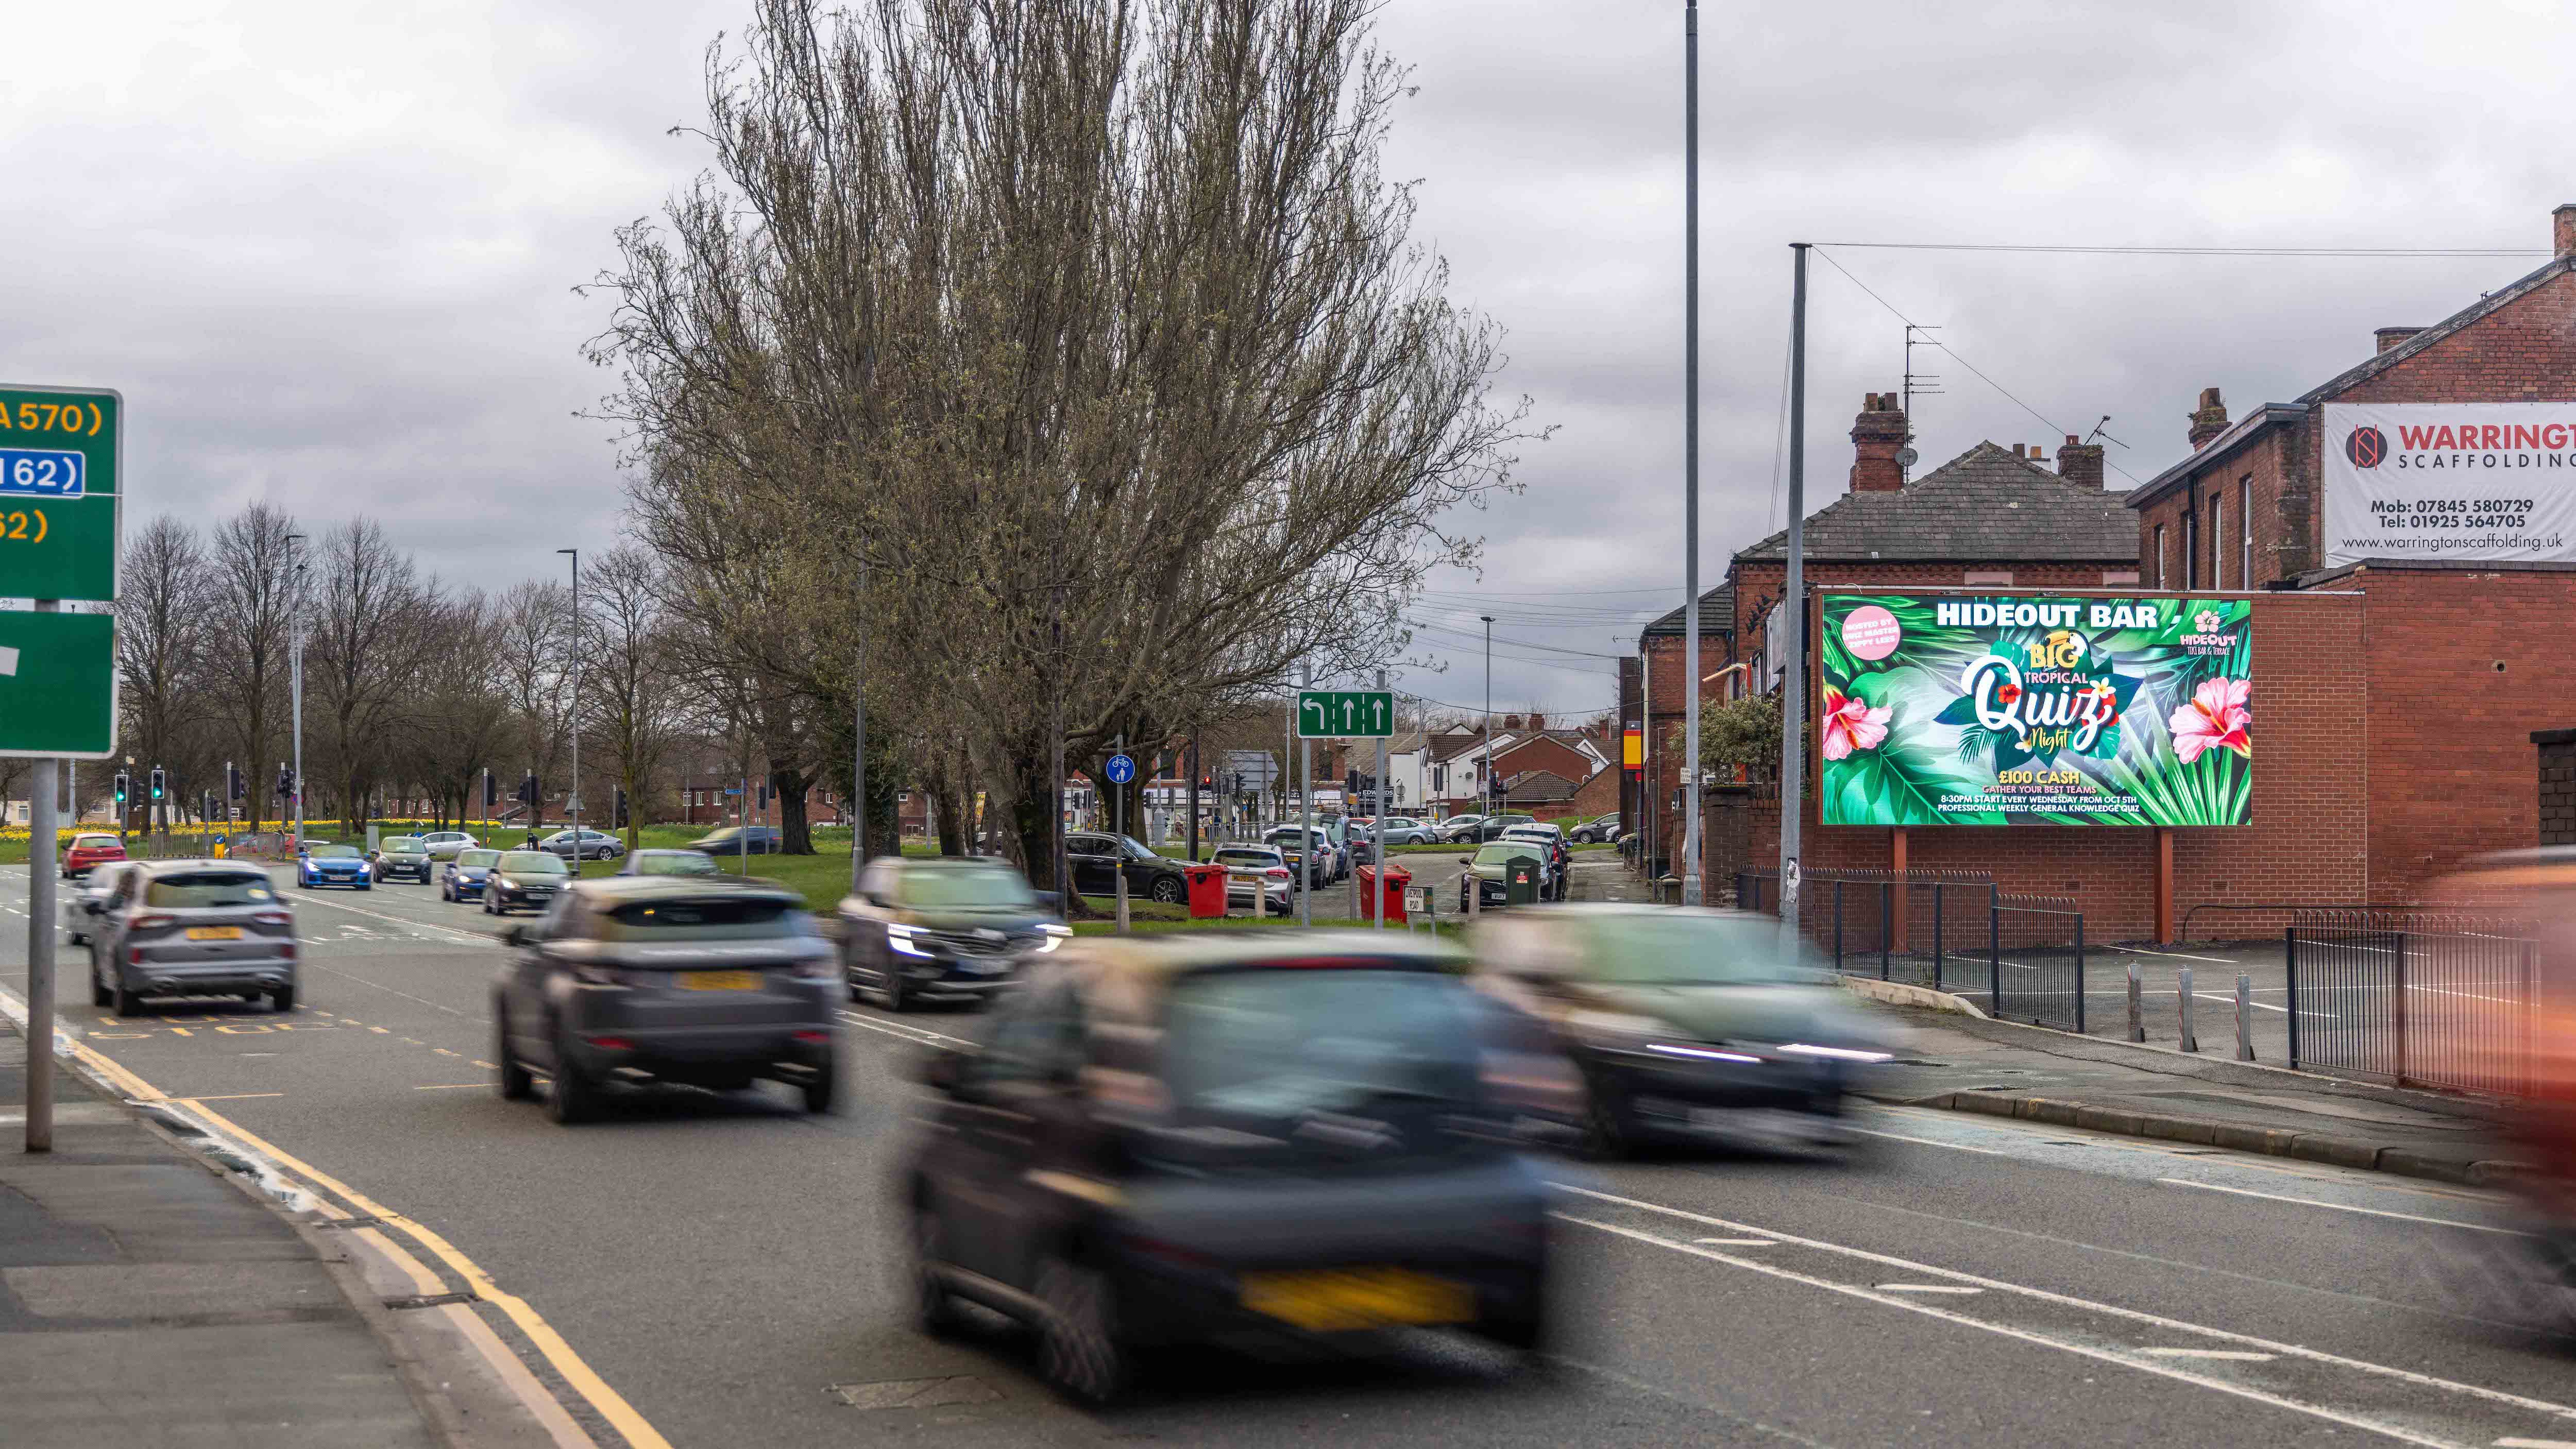 warrington liverpool road advertising screen 1 1